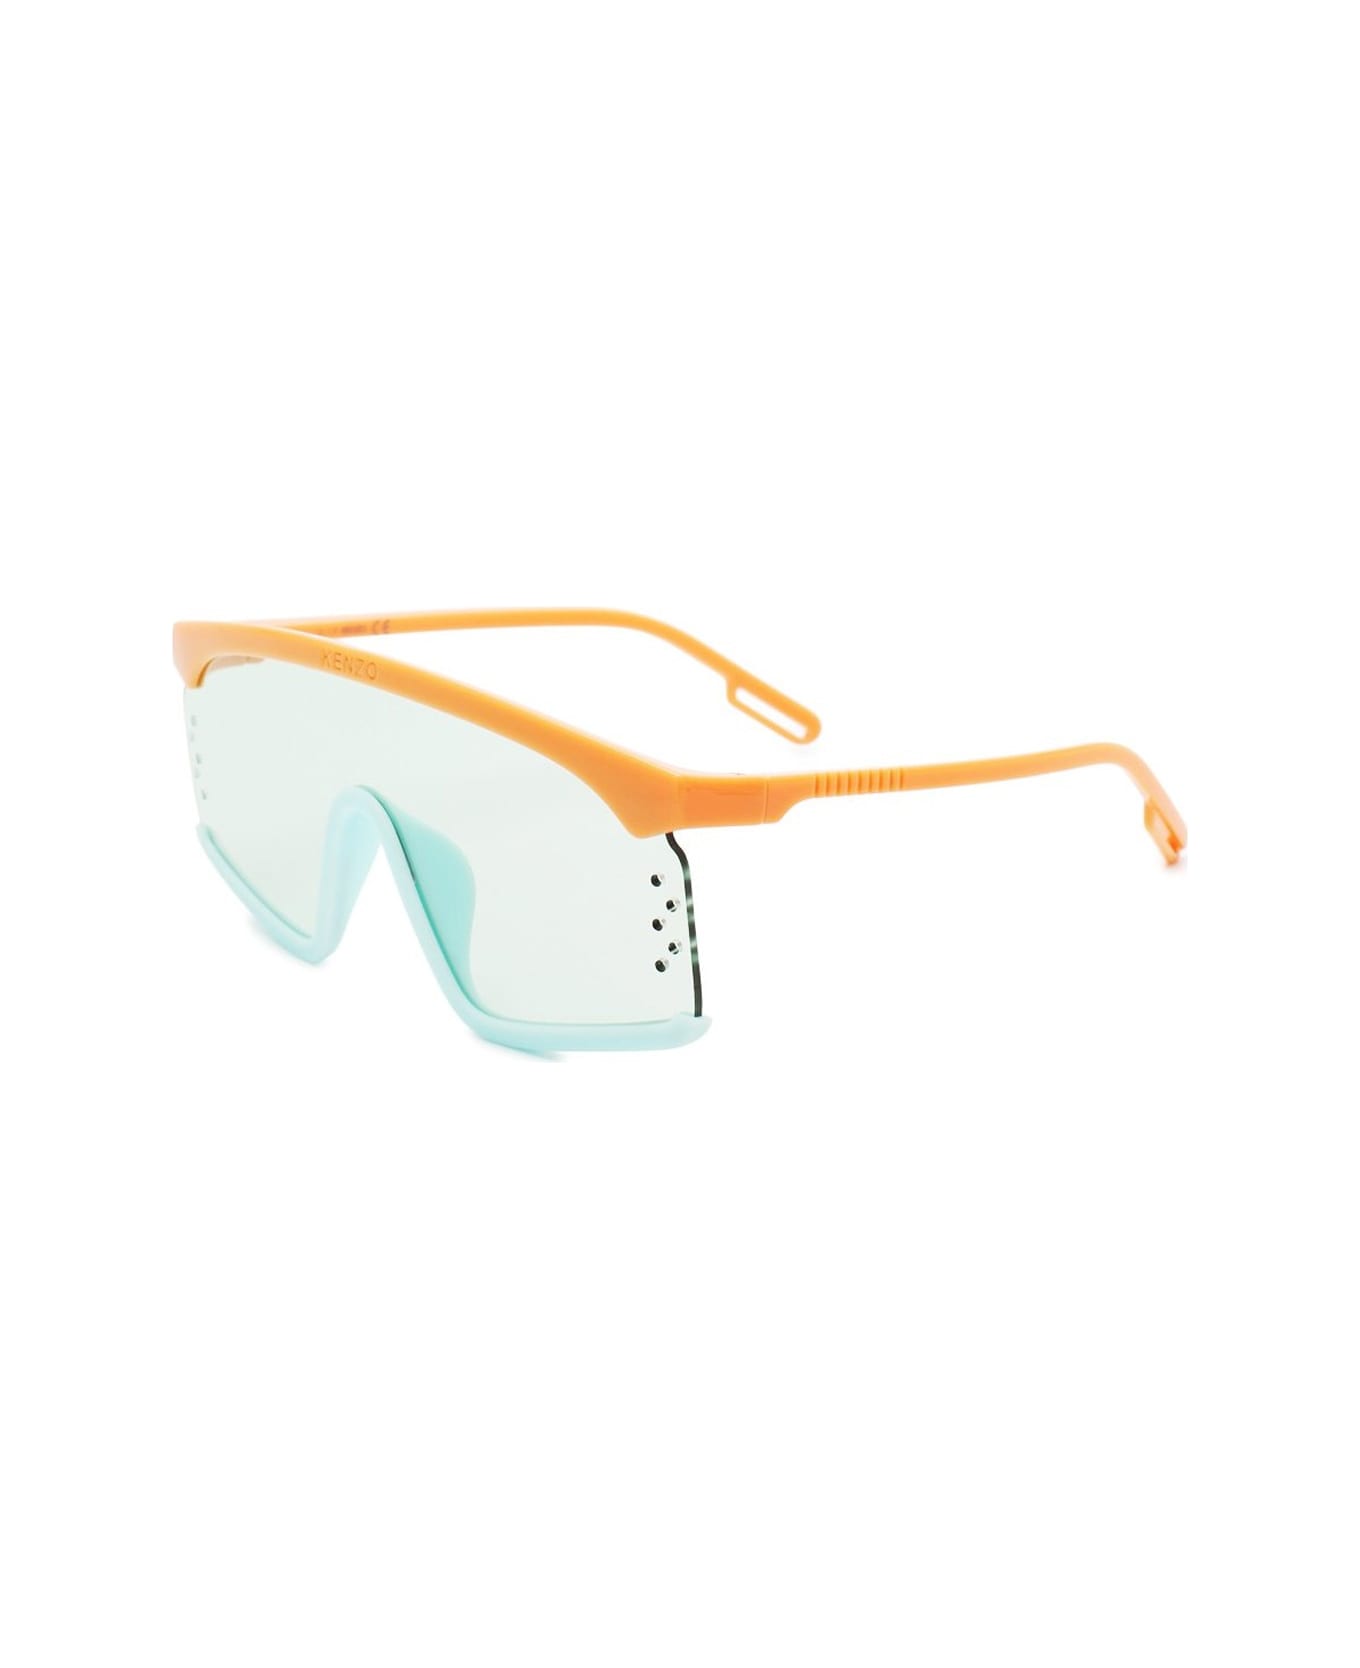 Kenzo Kz40010u Sunglasses - Arancione